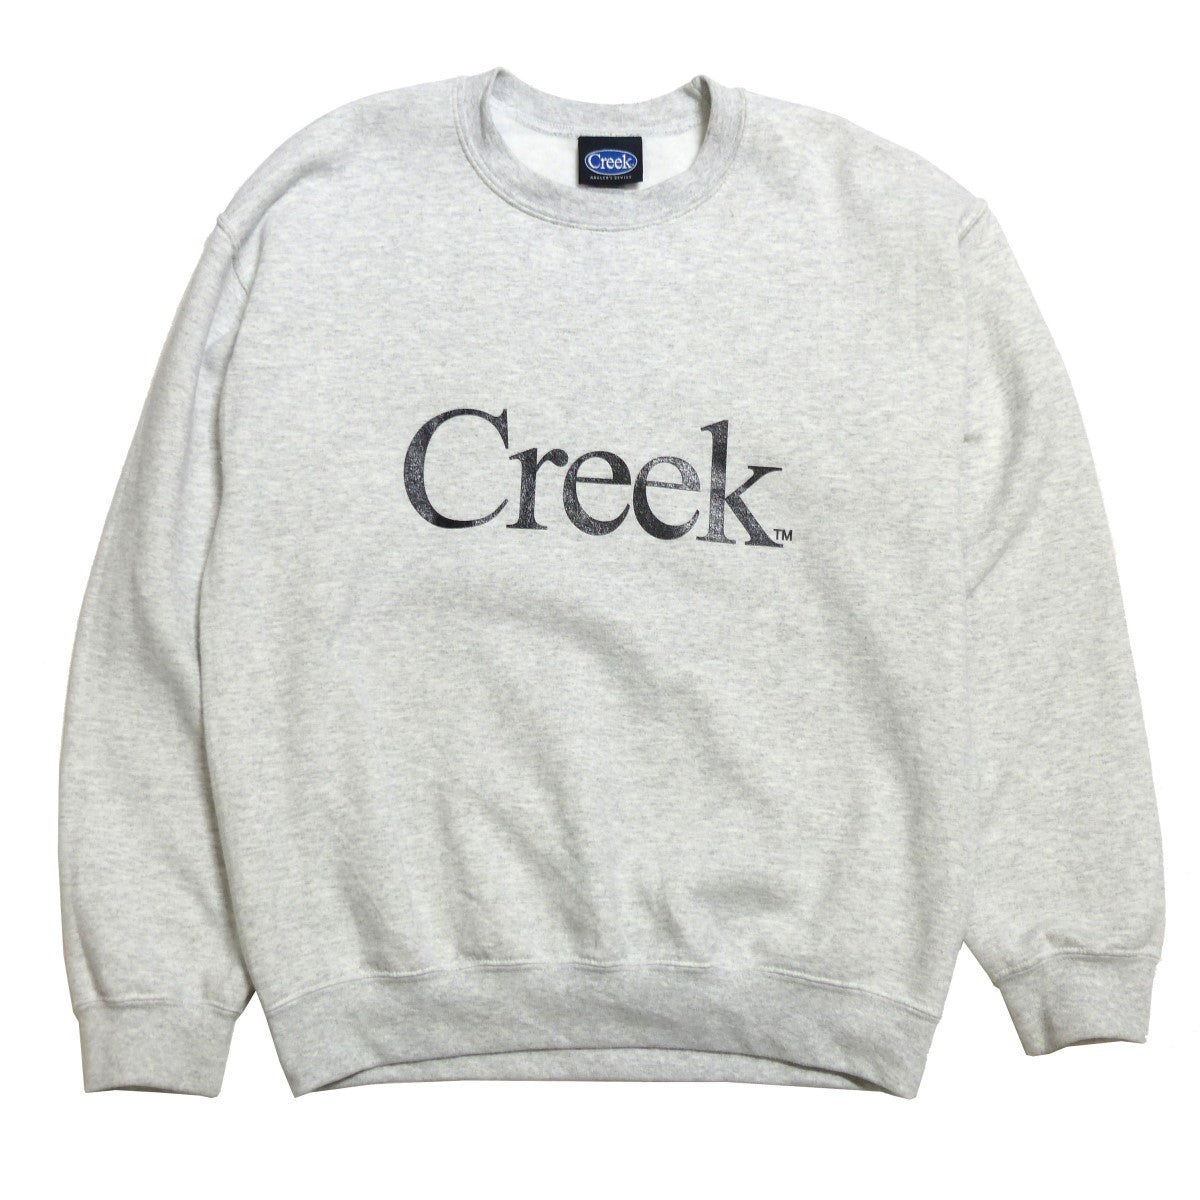 Creek Angler's Device(クリーク アングラーズデバイス) Logo Crewneck 